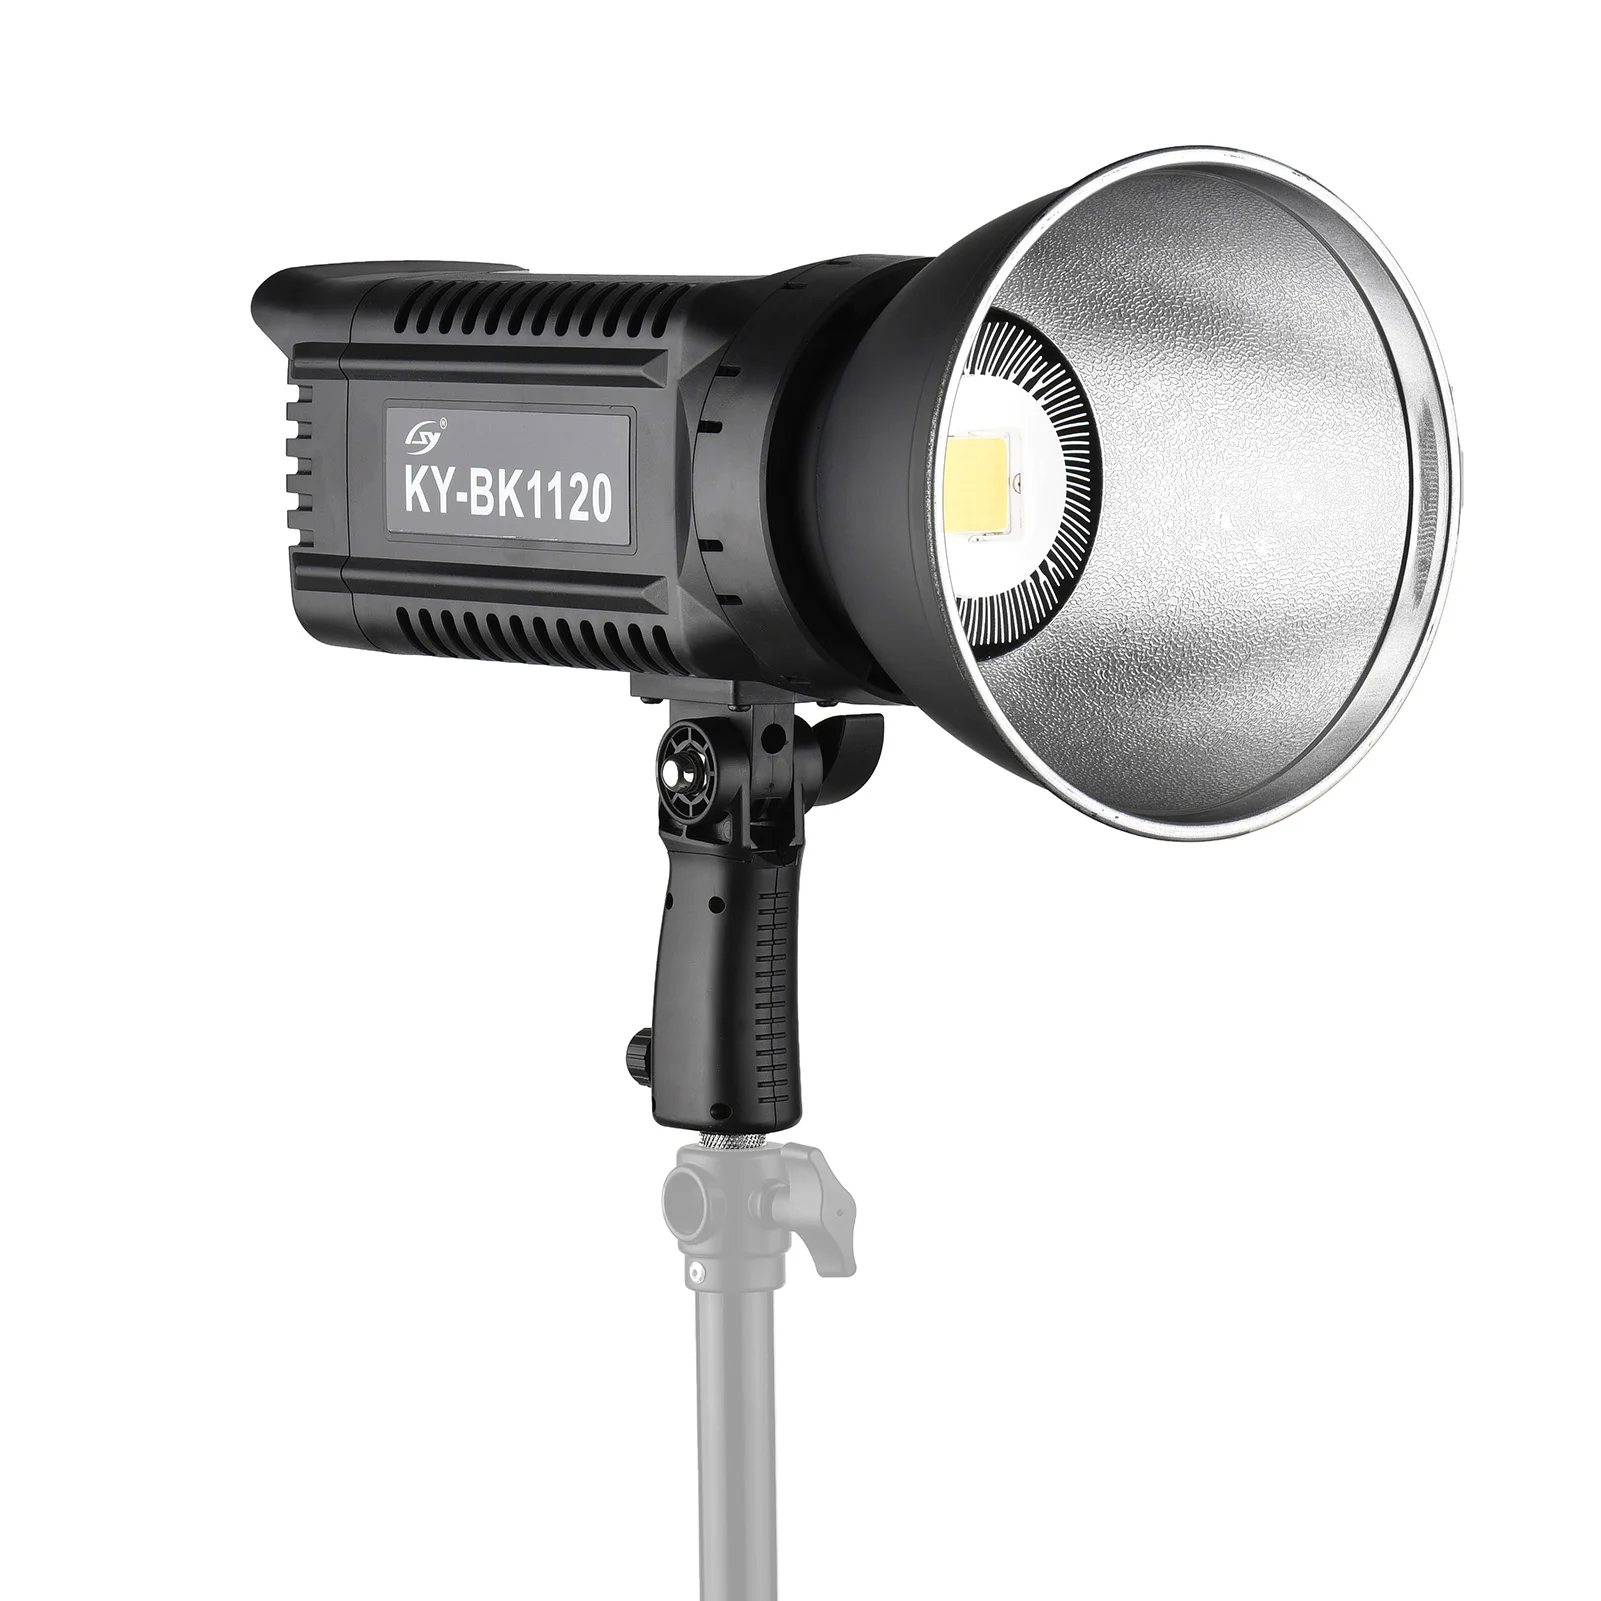 

150W Studio LED Video Light 5600K Color Temperature Adjustable Brightness CRI93+ TLCI95+ Bowens Mount with Protector Reflector